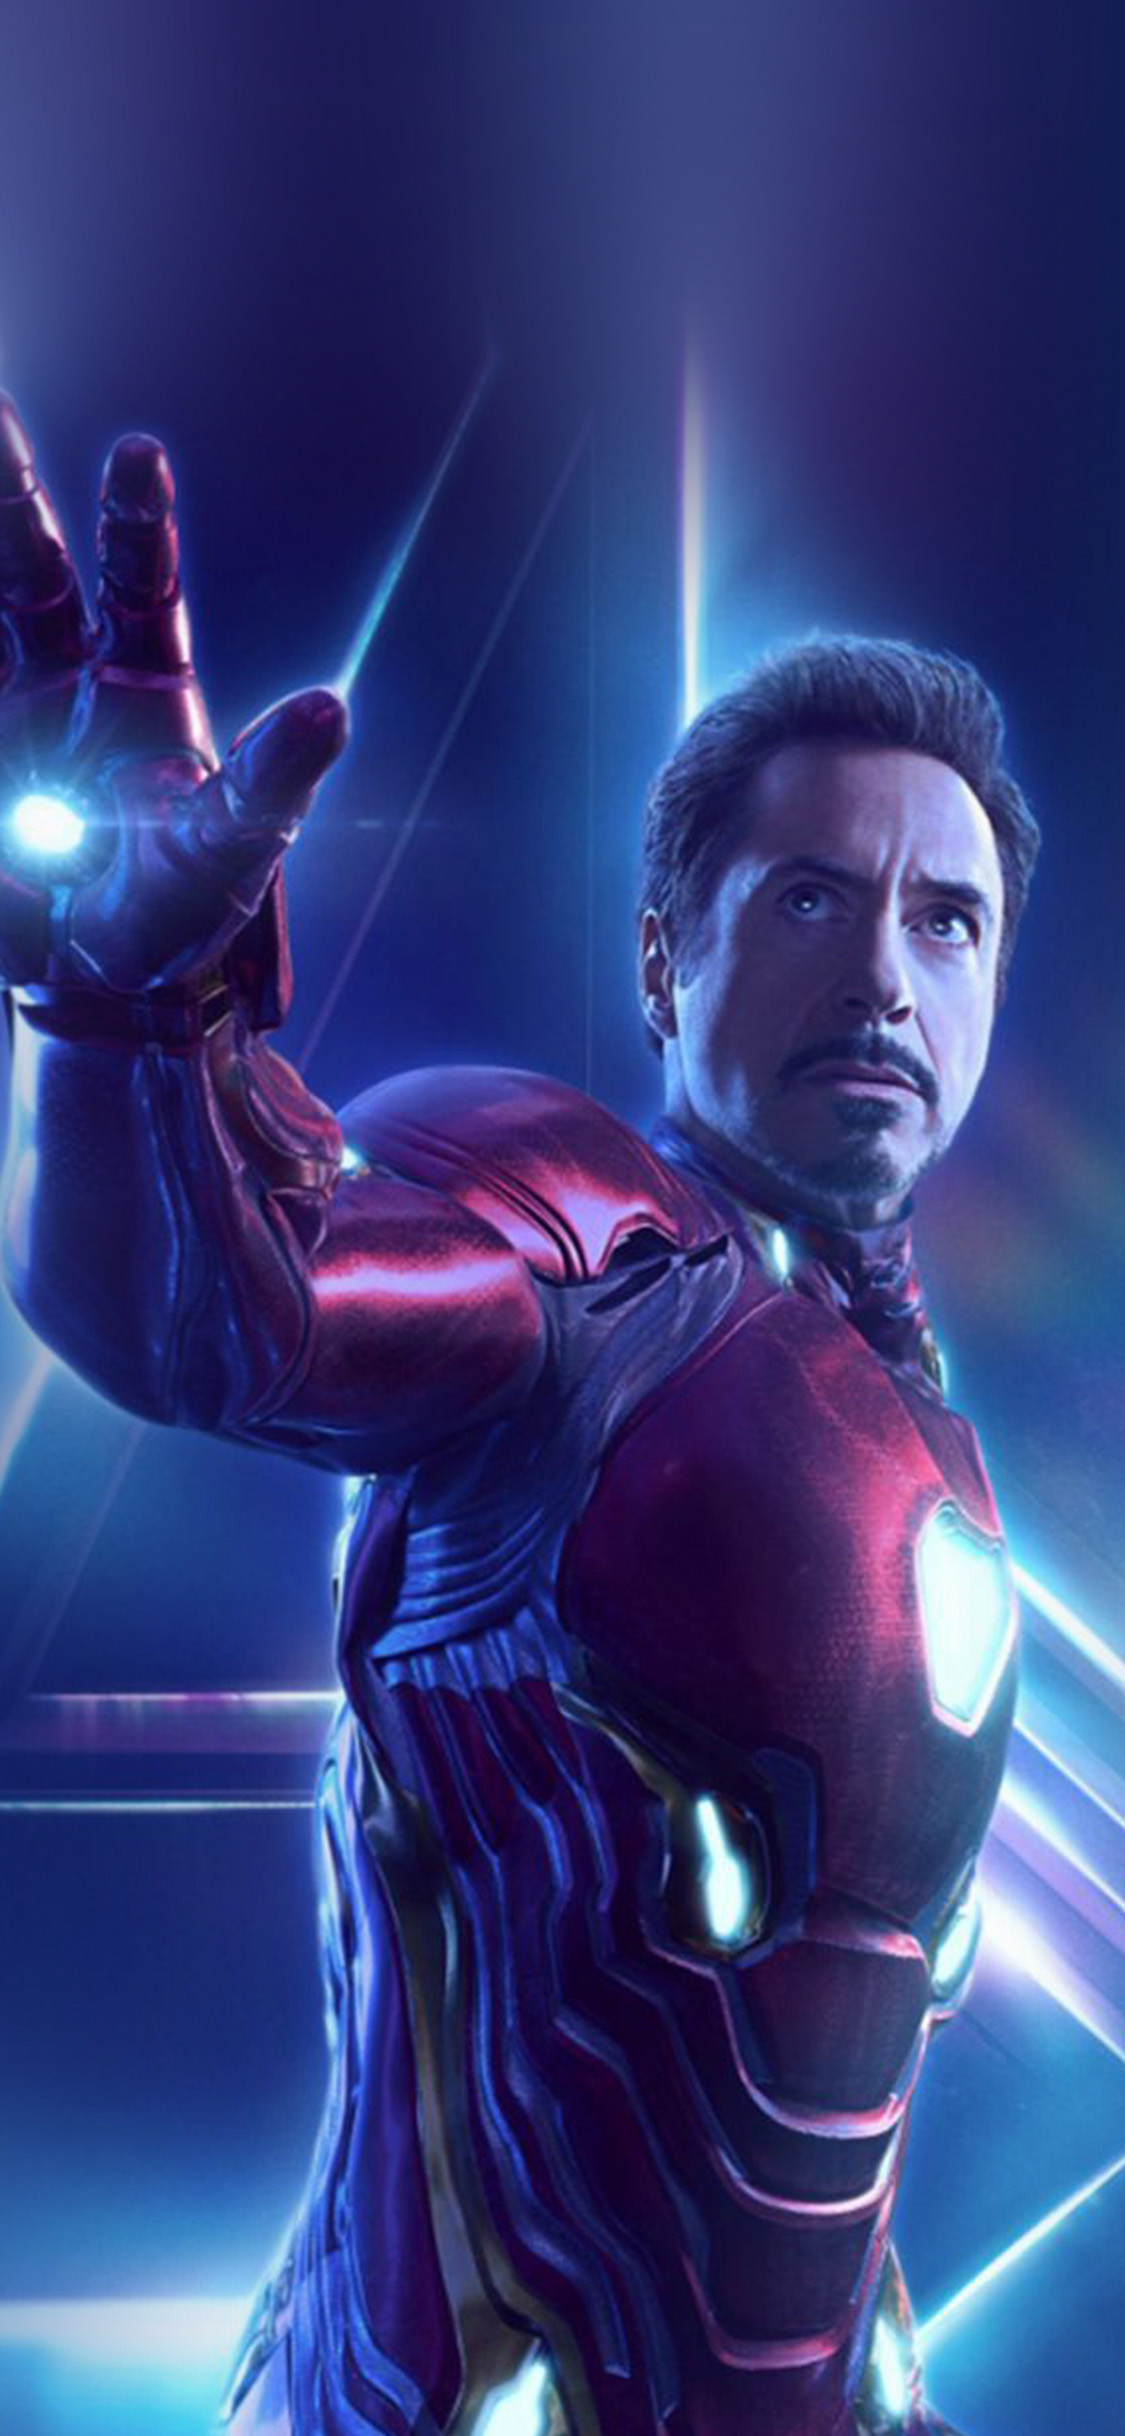 Iron Man Wallpaper iPhone (93+ images)